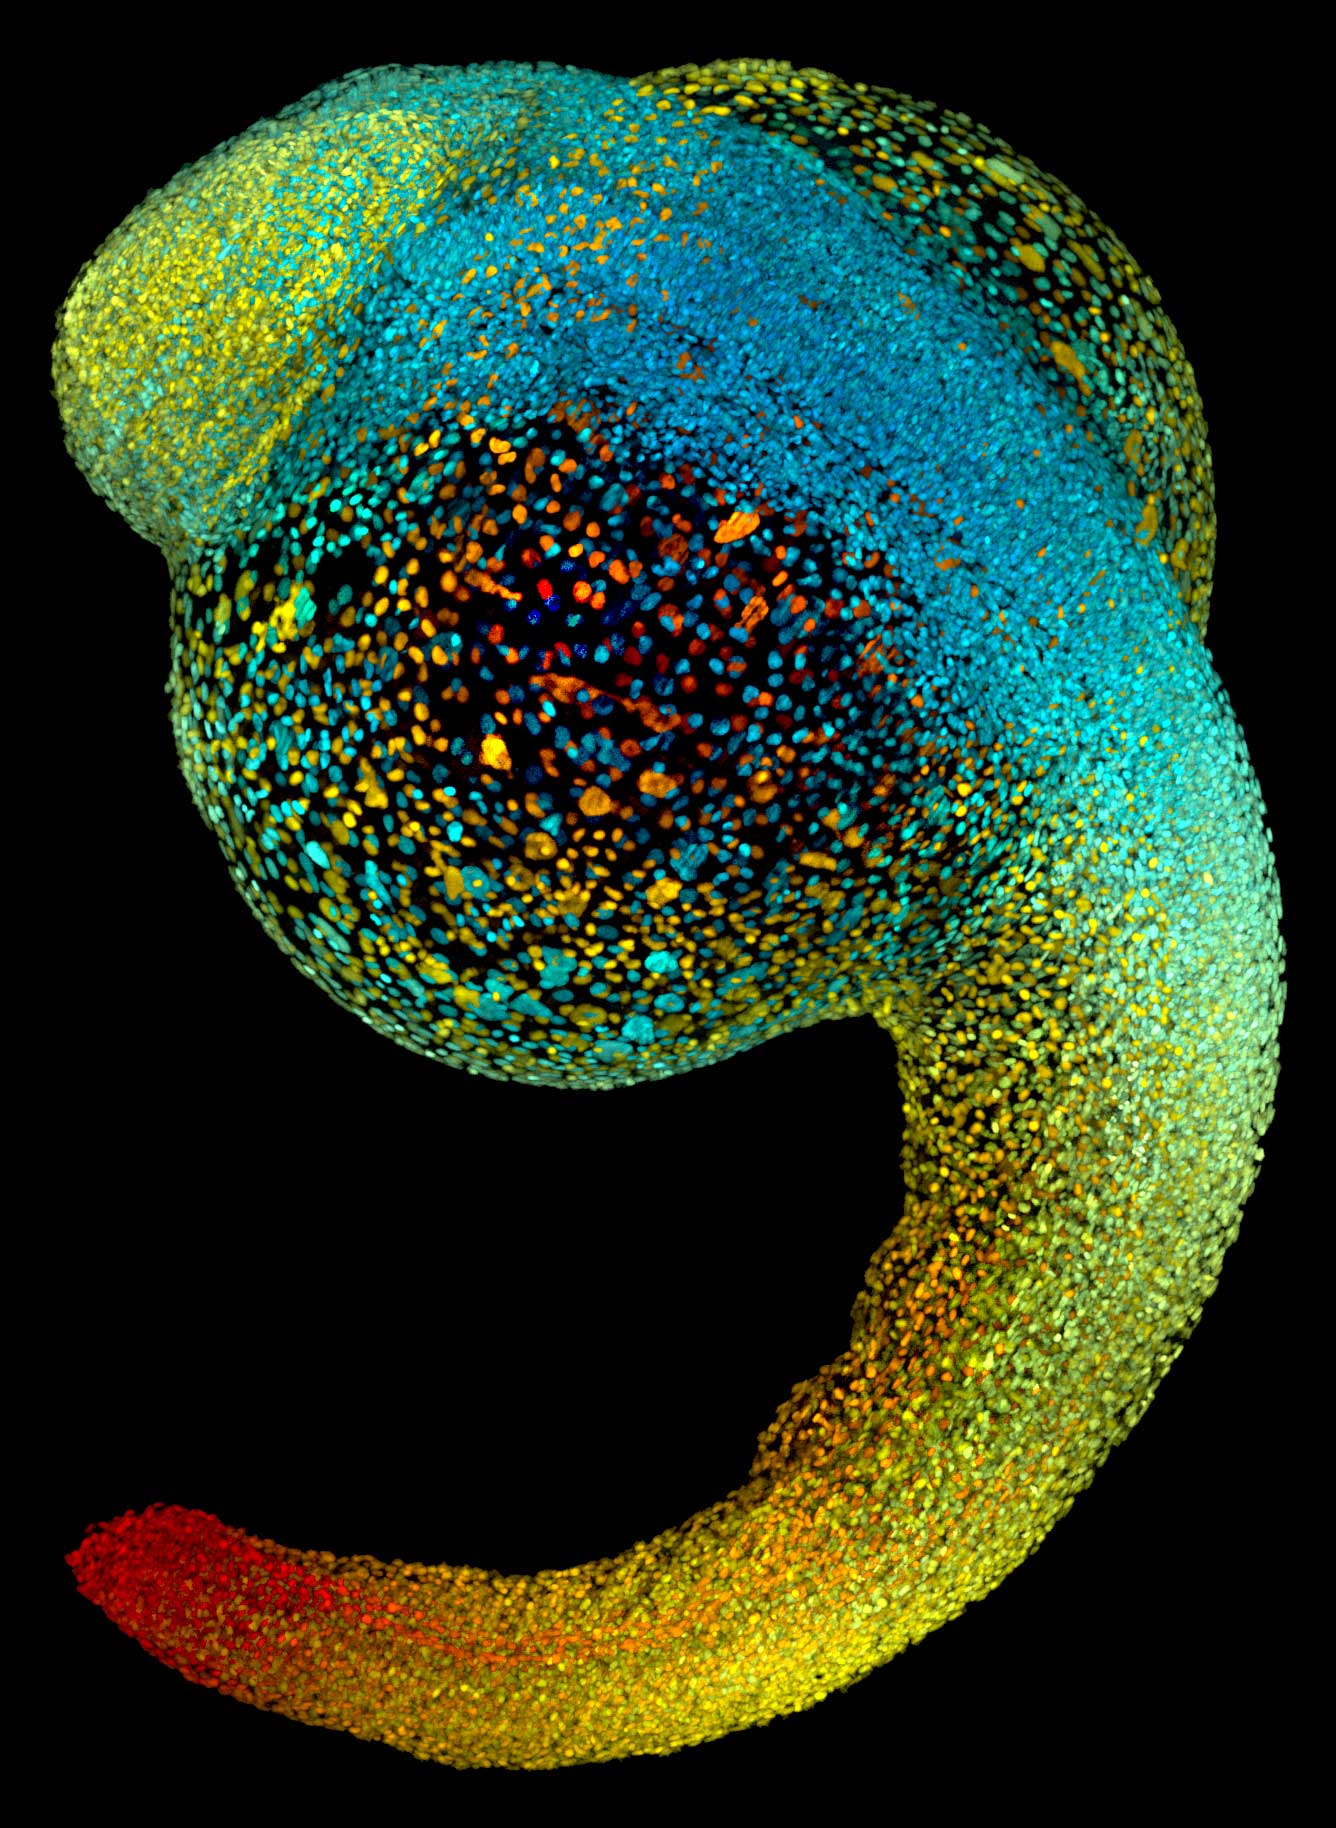 Live zebrafish embryo at 22 hours post-fertilization